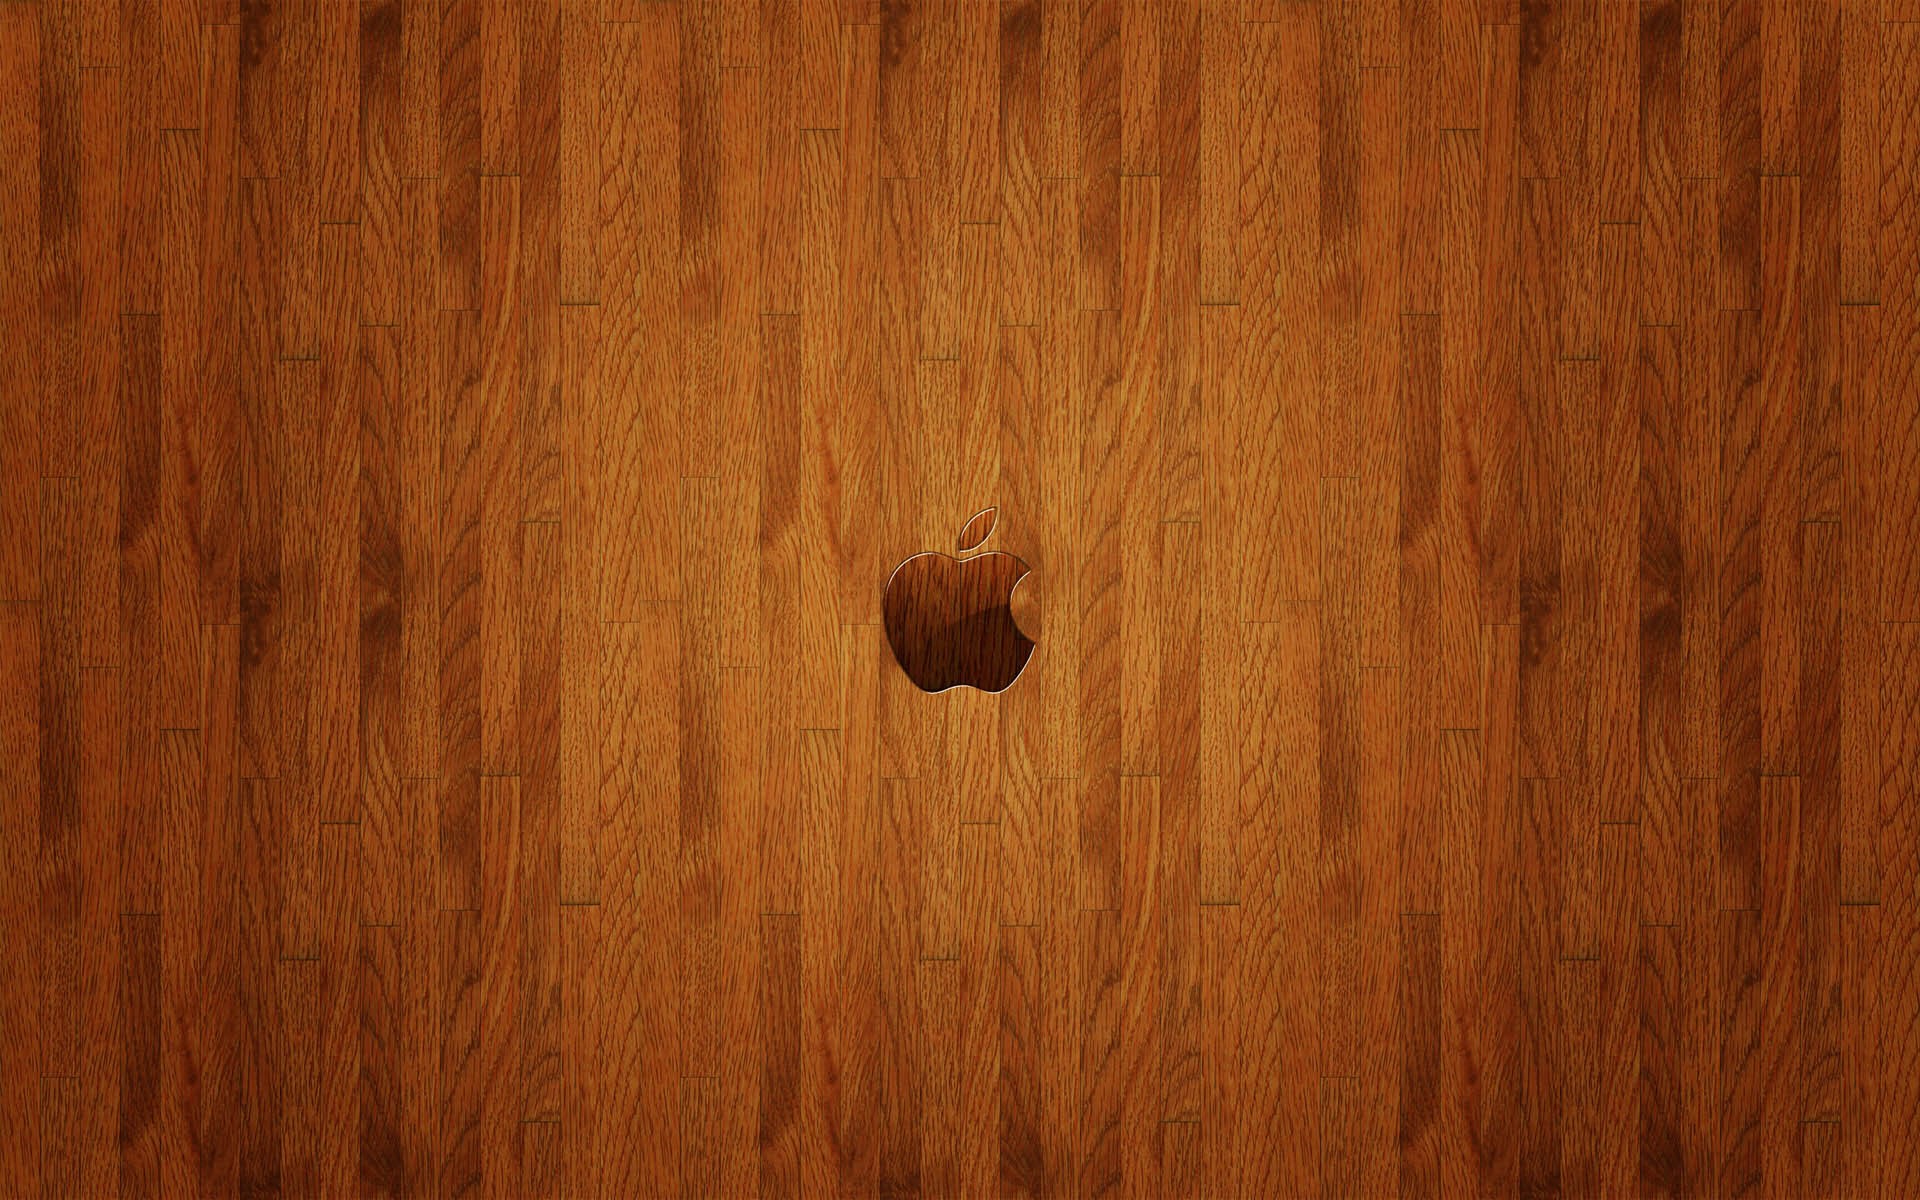 Apple Inc., wood panels, logos - desktop wallpaper